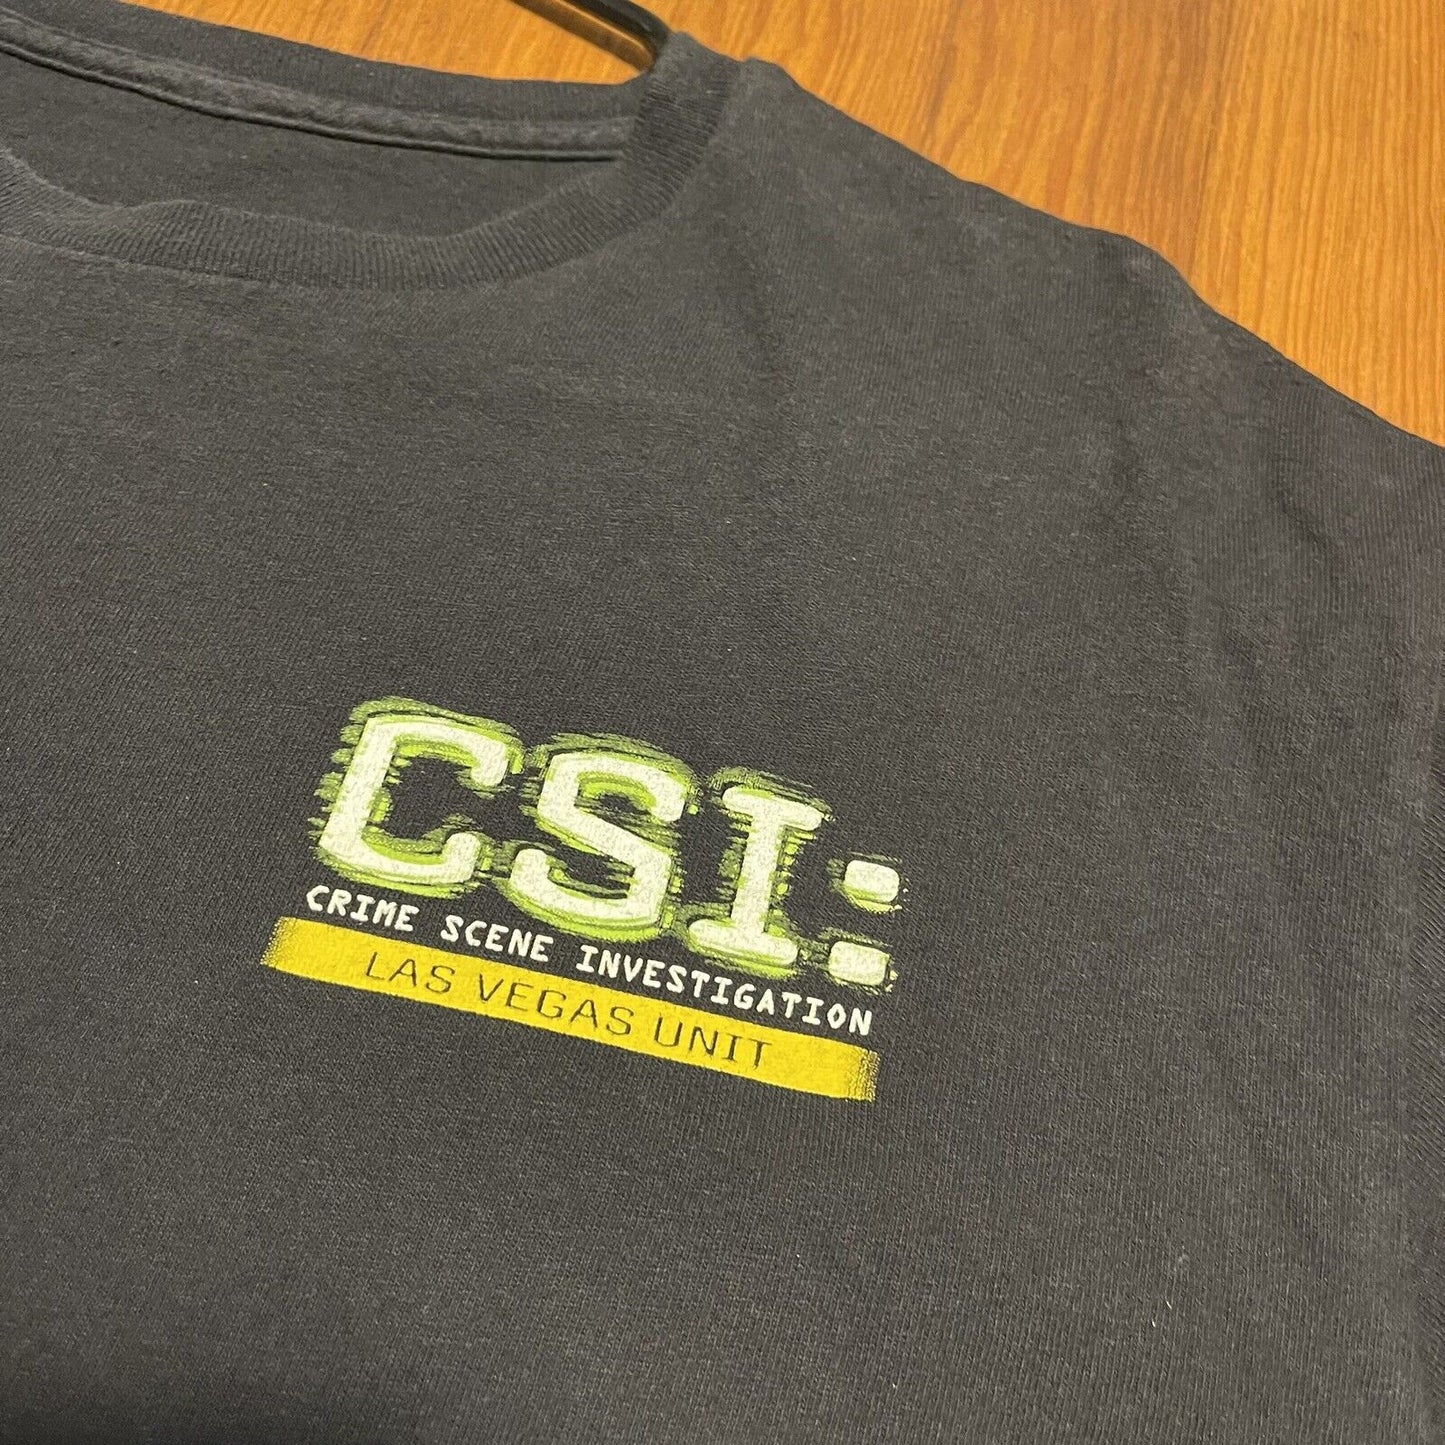 Vintage CSI Crime Scene Investigation Las Vegas Unit Black T Shirt Large